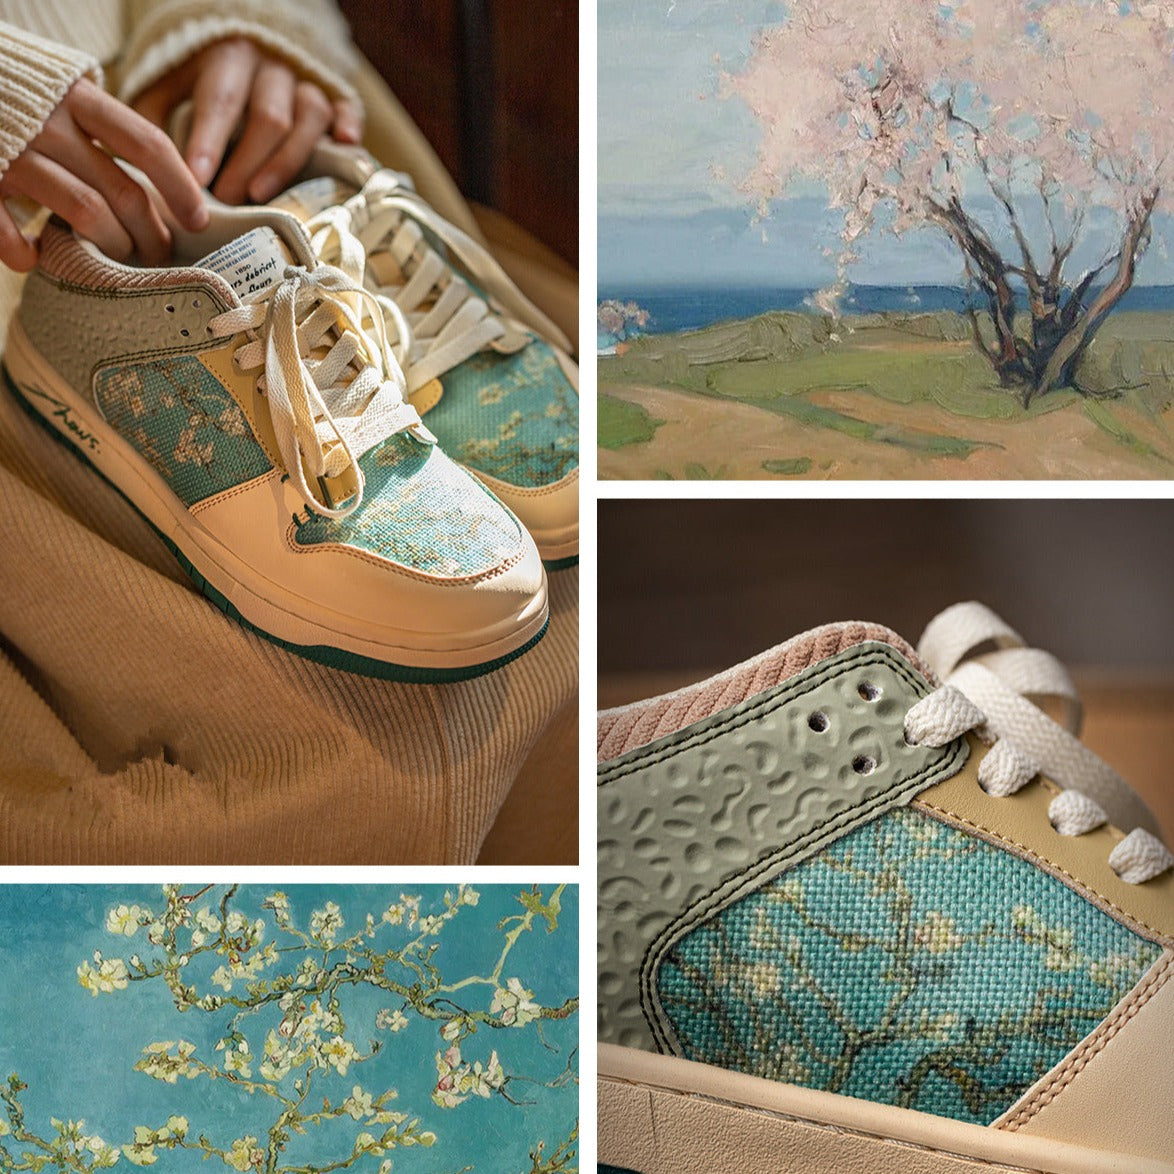 Zapatillas inspiradas en Van Gogh Almond Blossoms